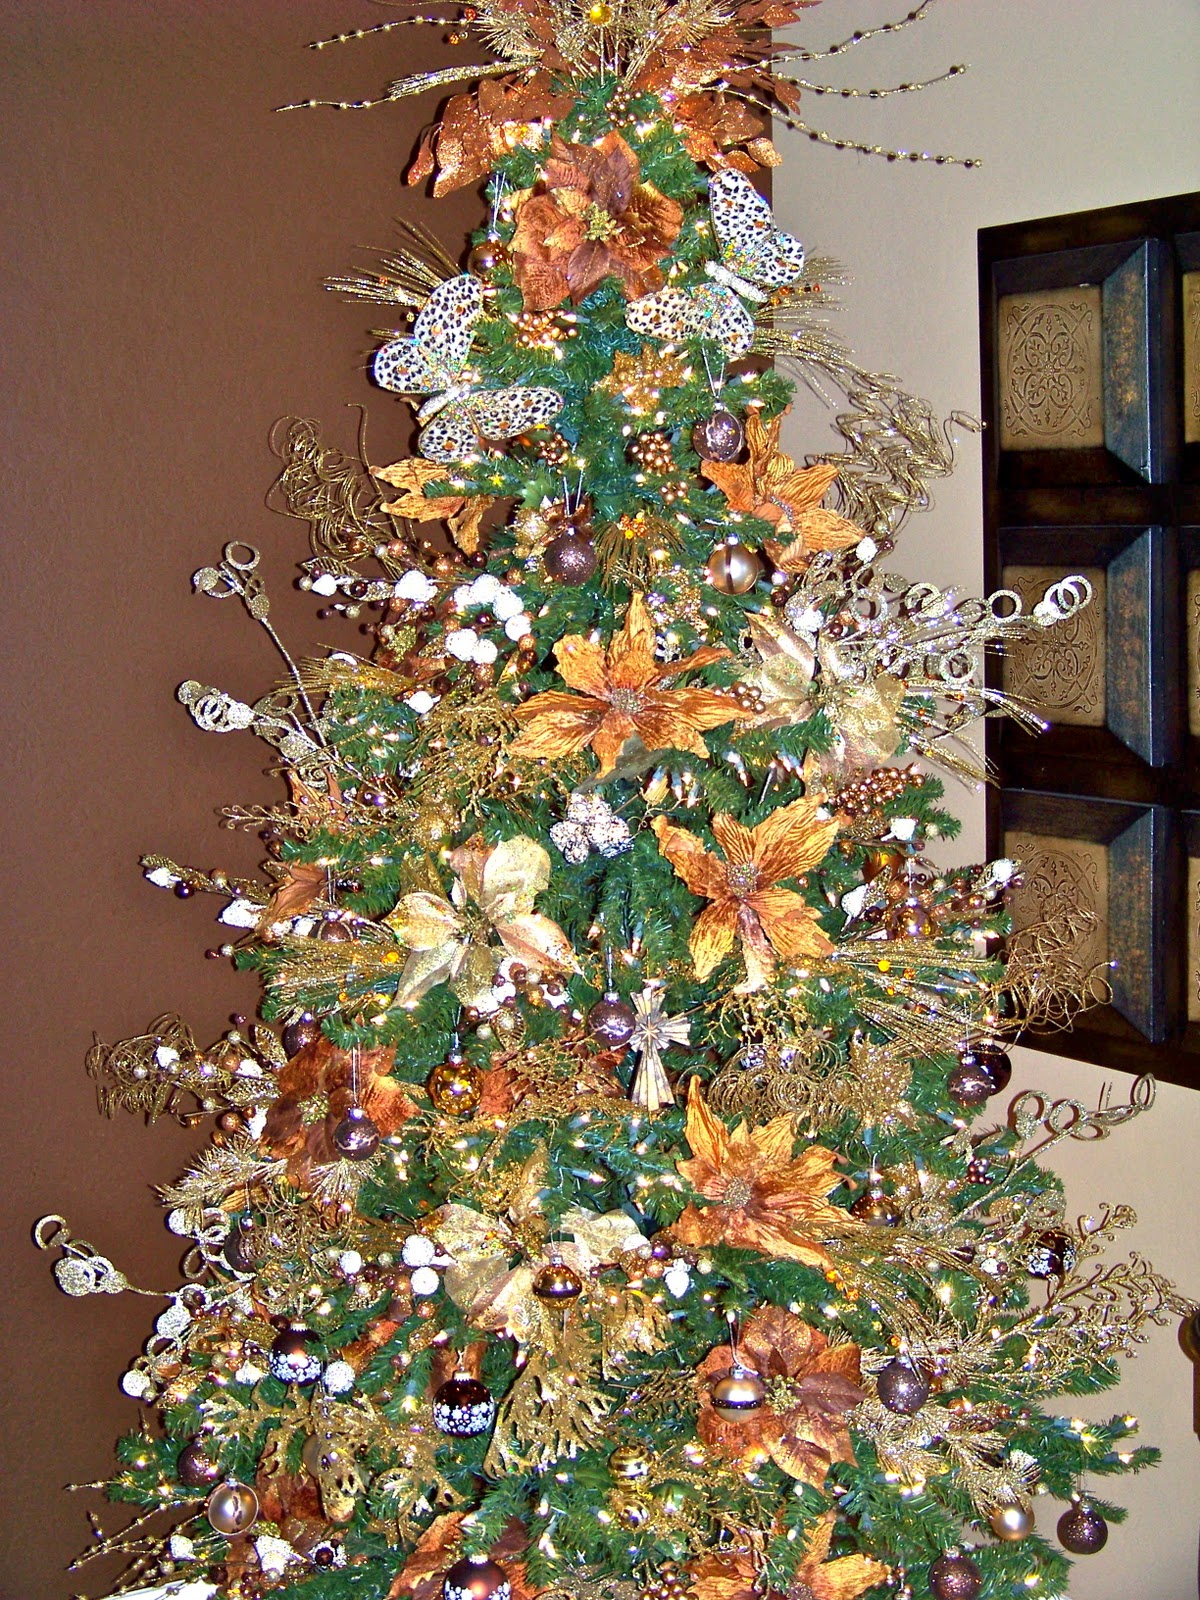 My Christmas  Tree  Dollar  Tree  Ornaments  Style with Nancy